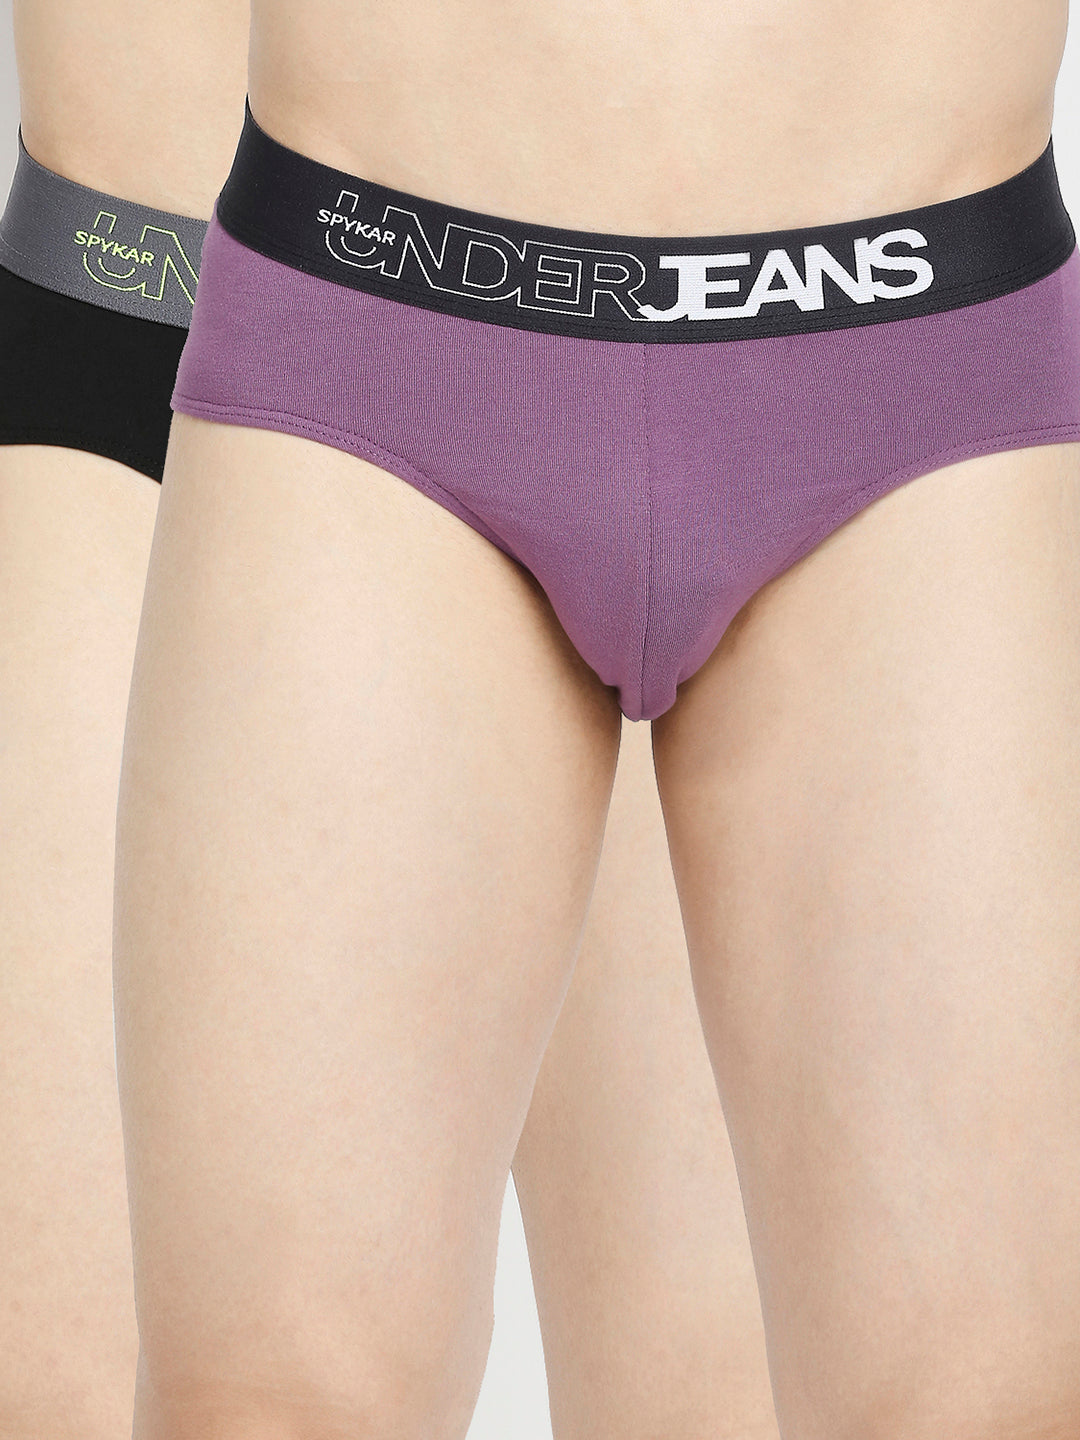 Men Premium Dull Purple & Black Cotton Blend Brief - Pack Of 2- UnderJeans by Spykar